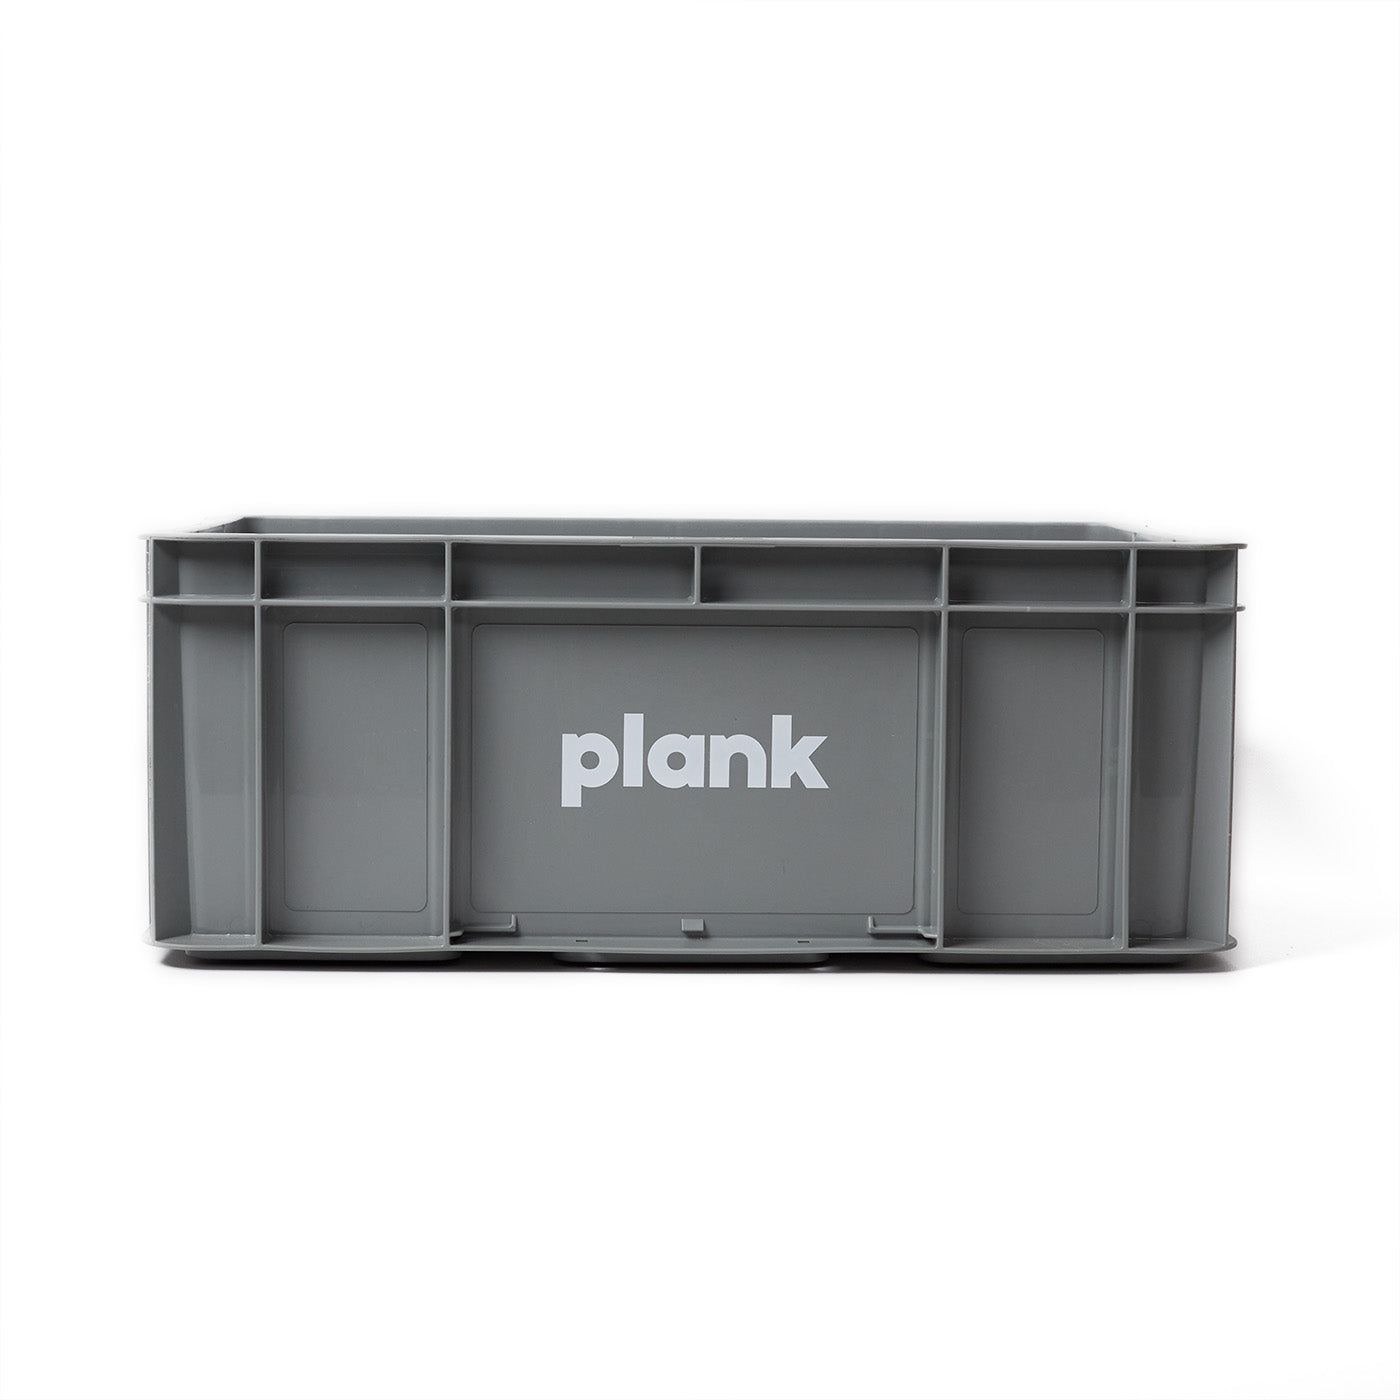 plank Storage Crates